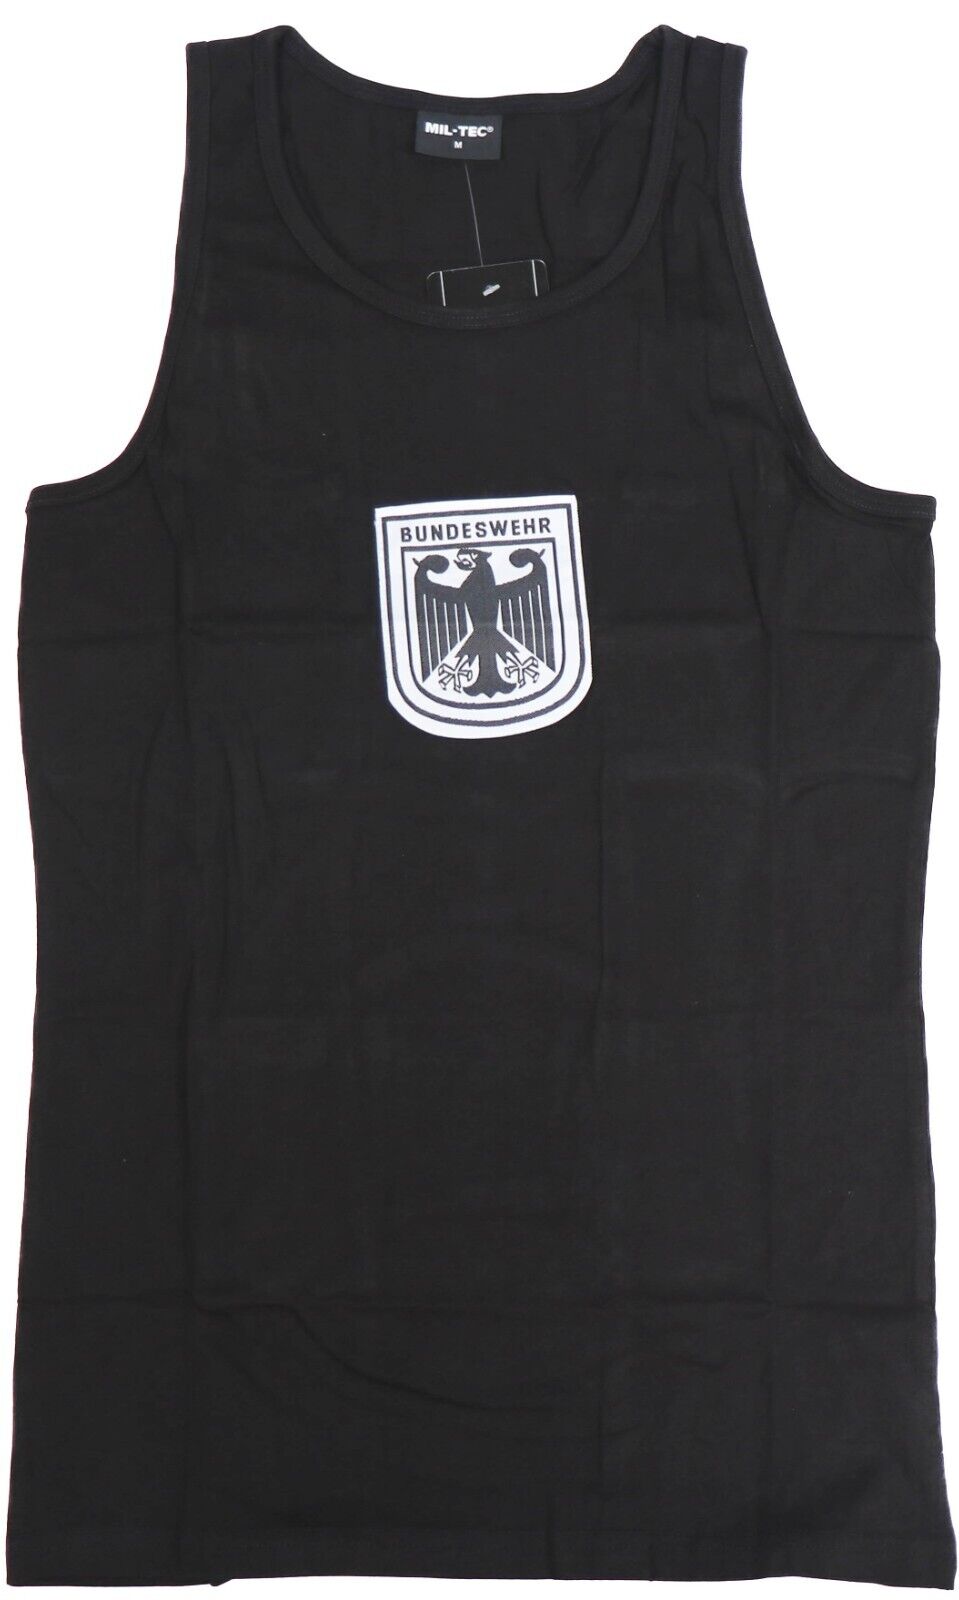 XXLarge - MilTec German Bundeswehr Black Tank Top PT Shirt Jacket Fitness Gym